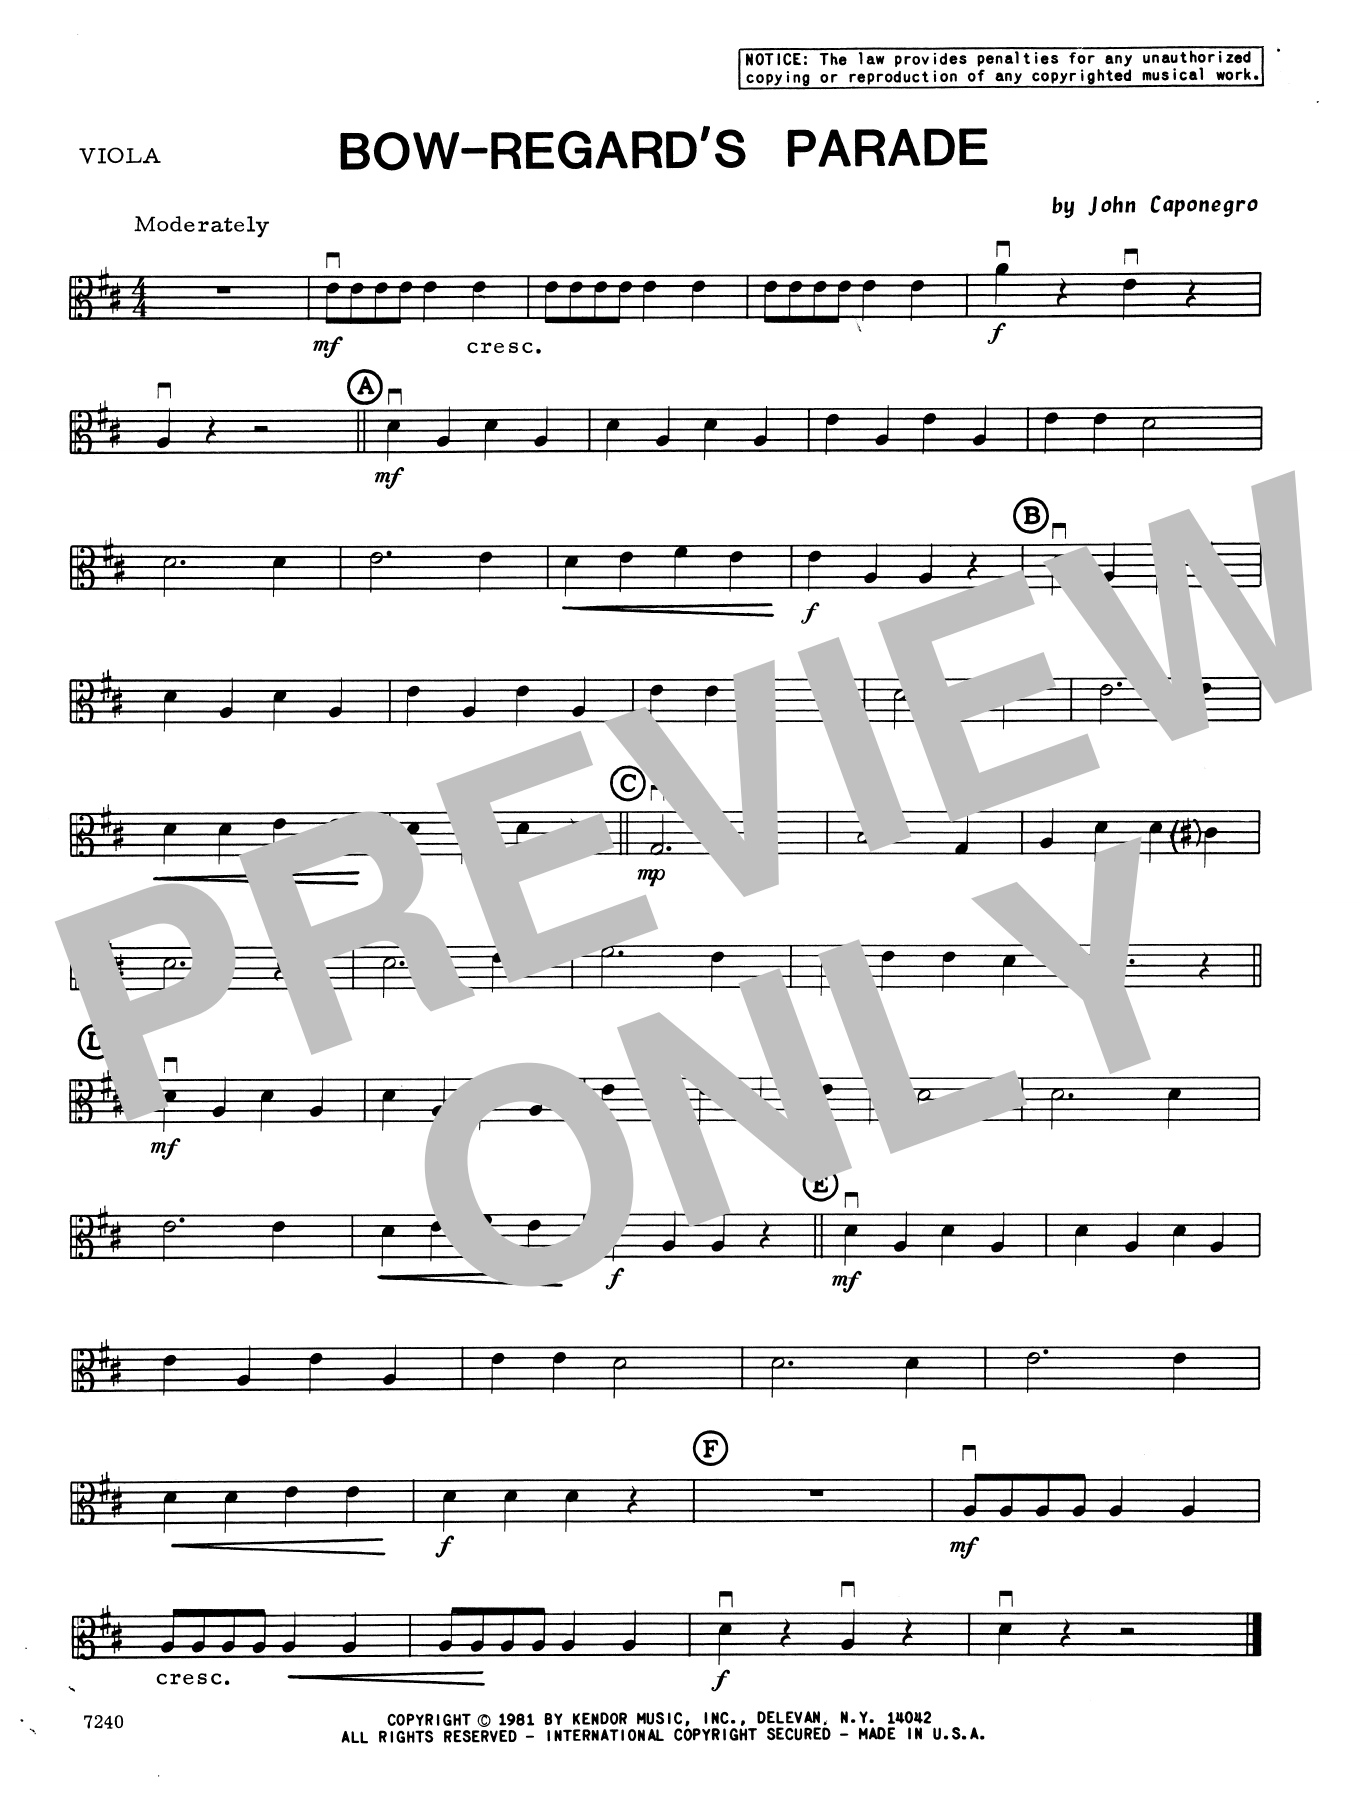 Download John Caponegro Bow-Regard's Parade - Viola Sheet Music